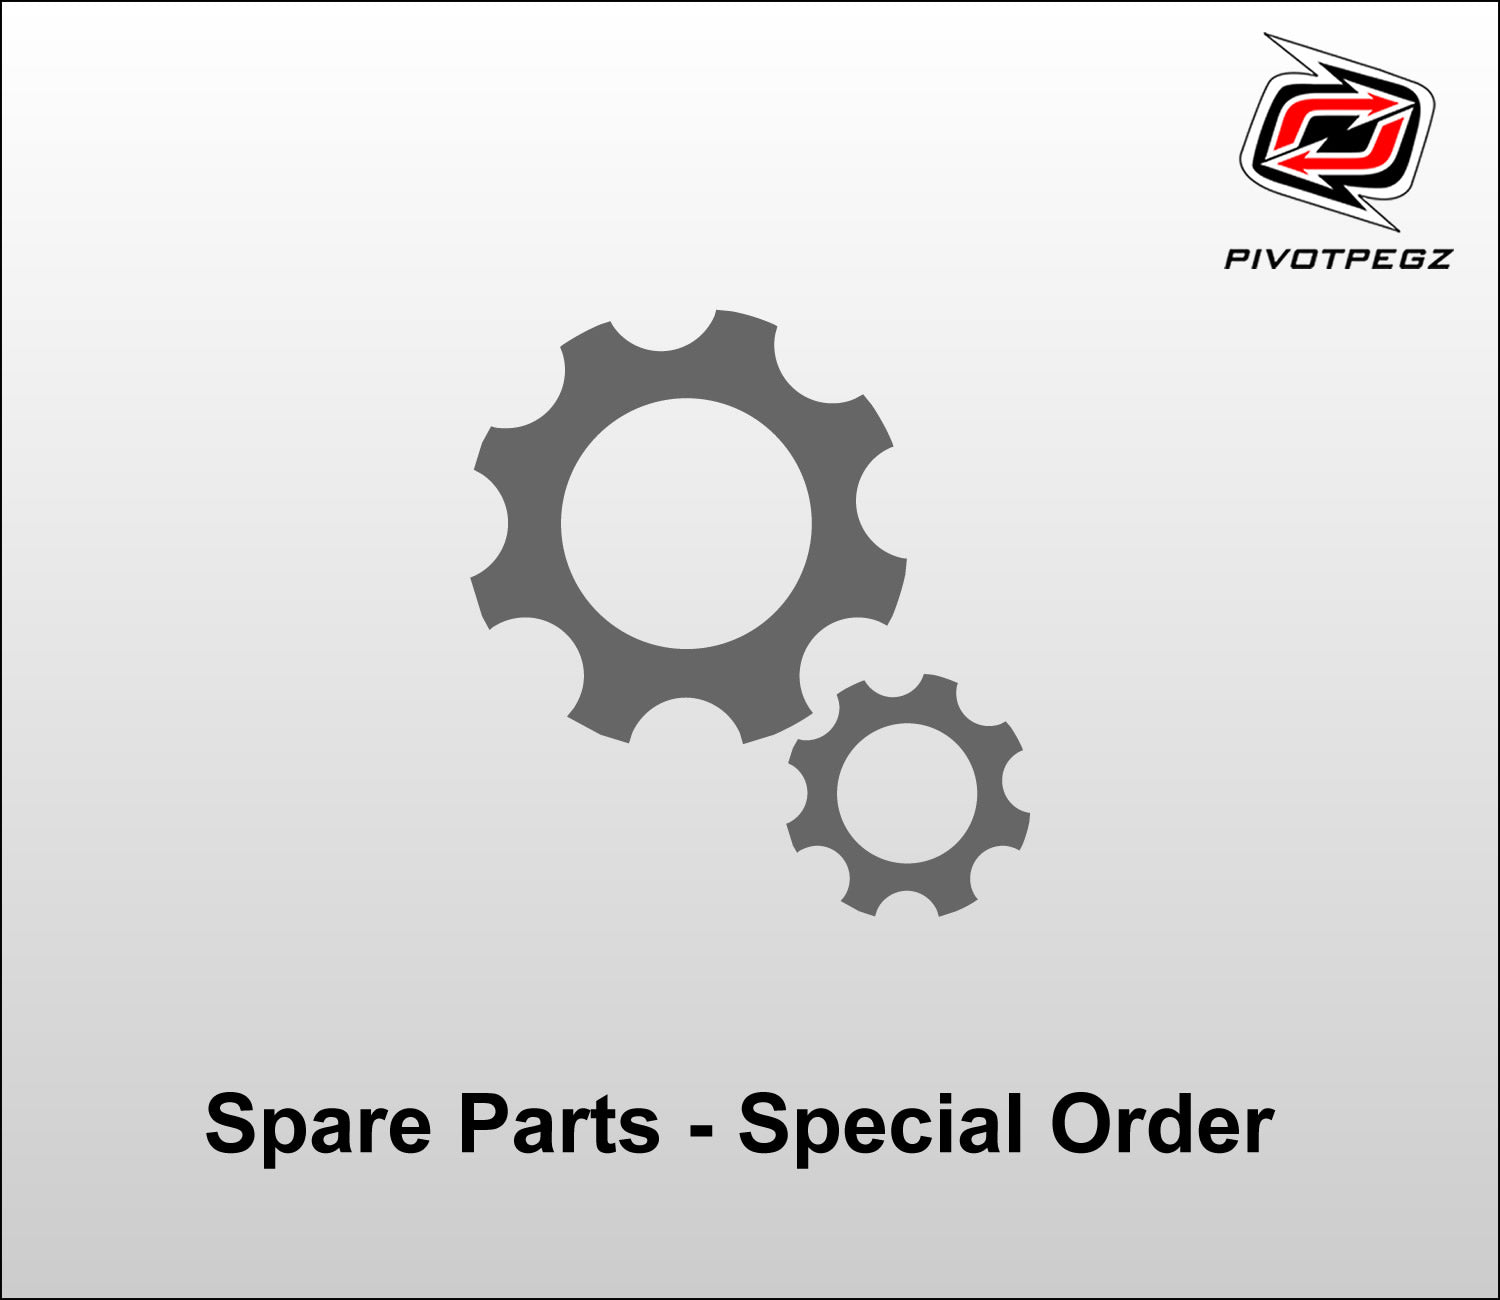 Spare Parts Special Order $5